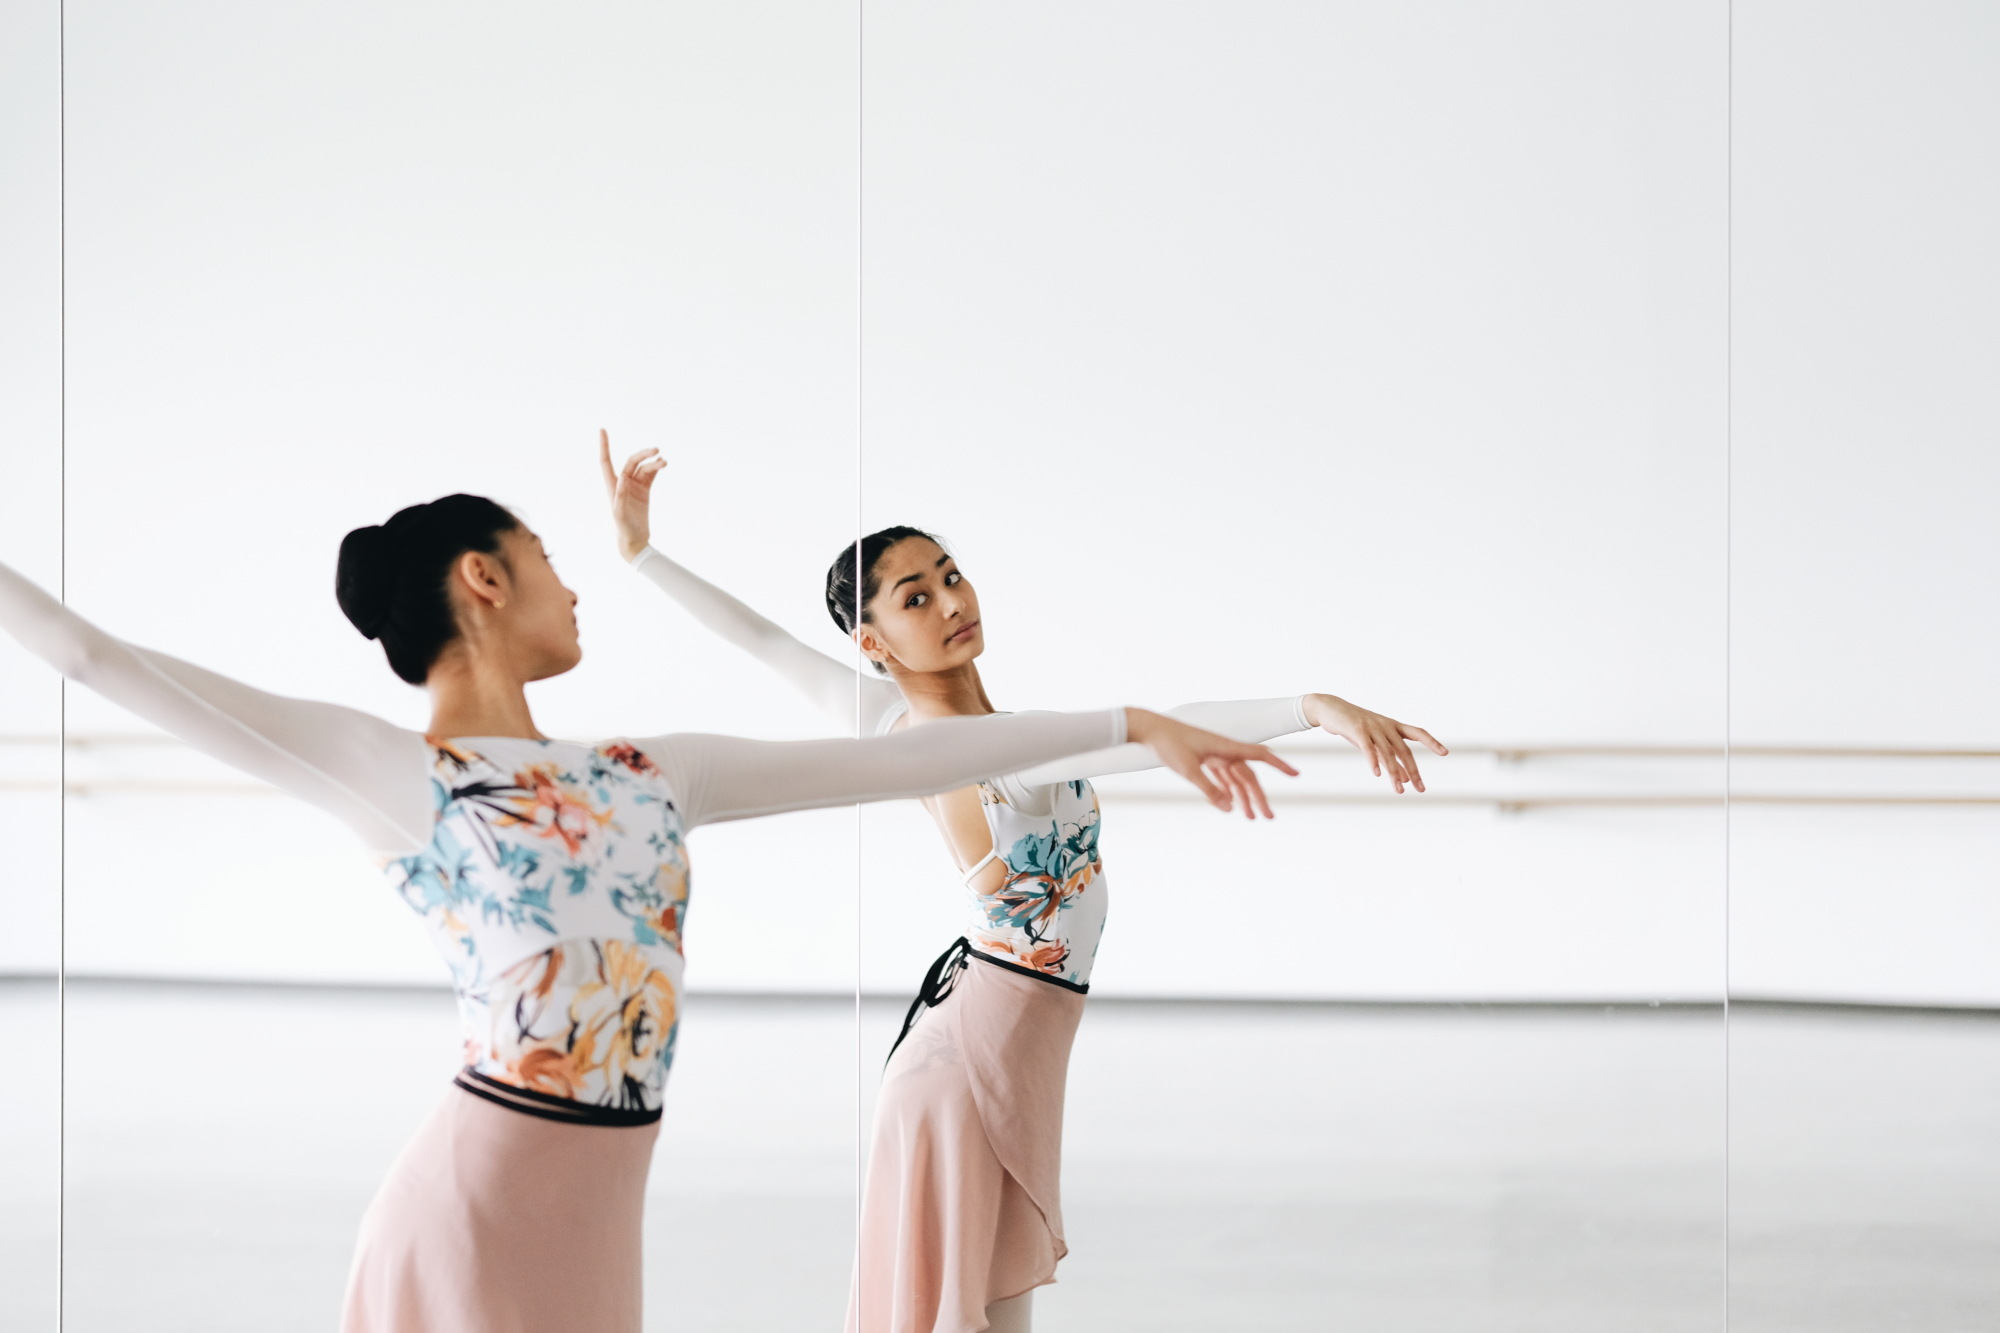 Fotoshooting im Balletstudio © Carolin Thiergart